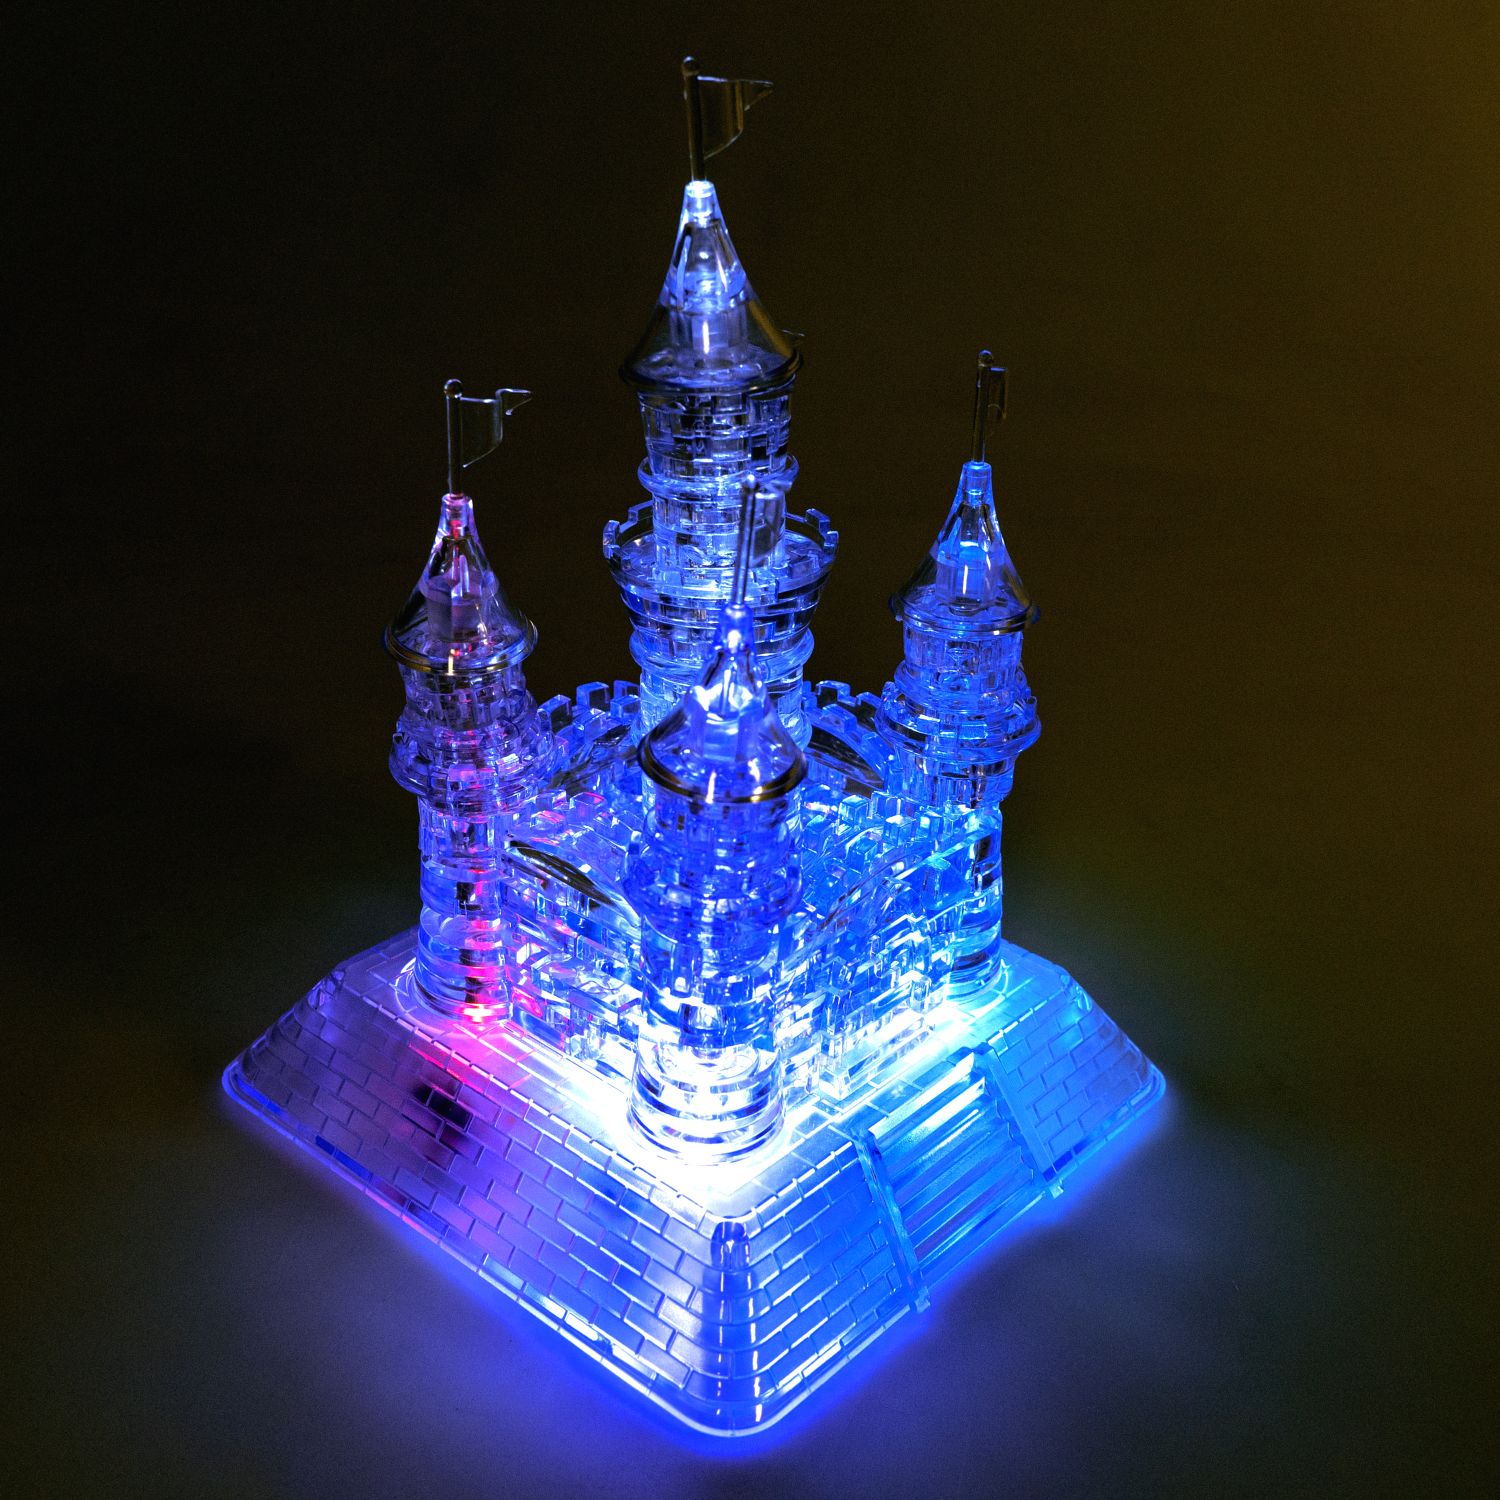 3D Головоломки Crystal Puzzle Замок